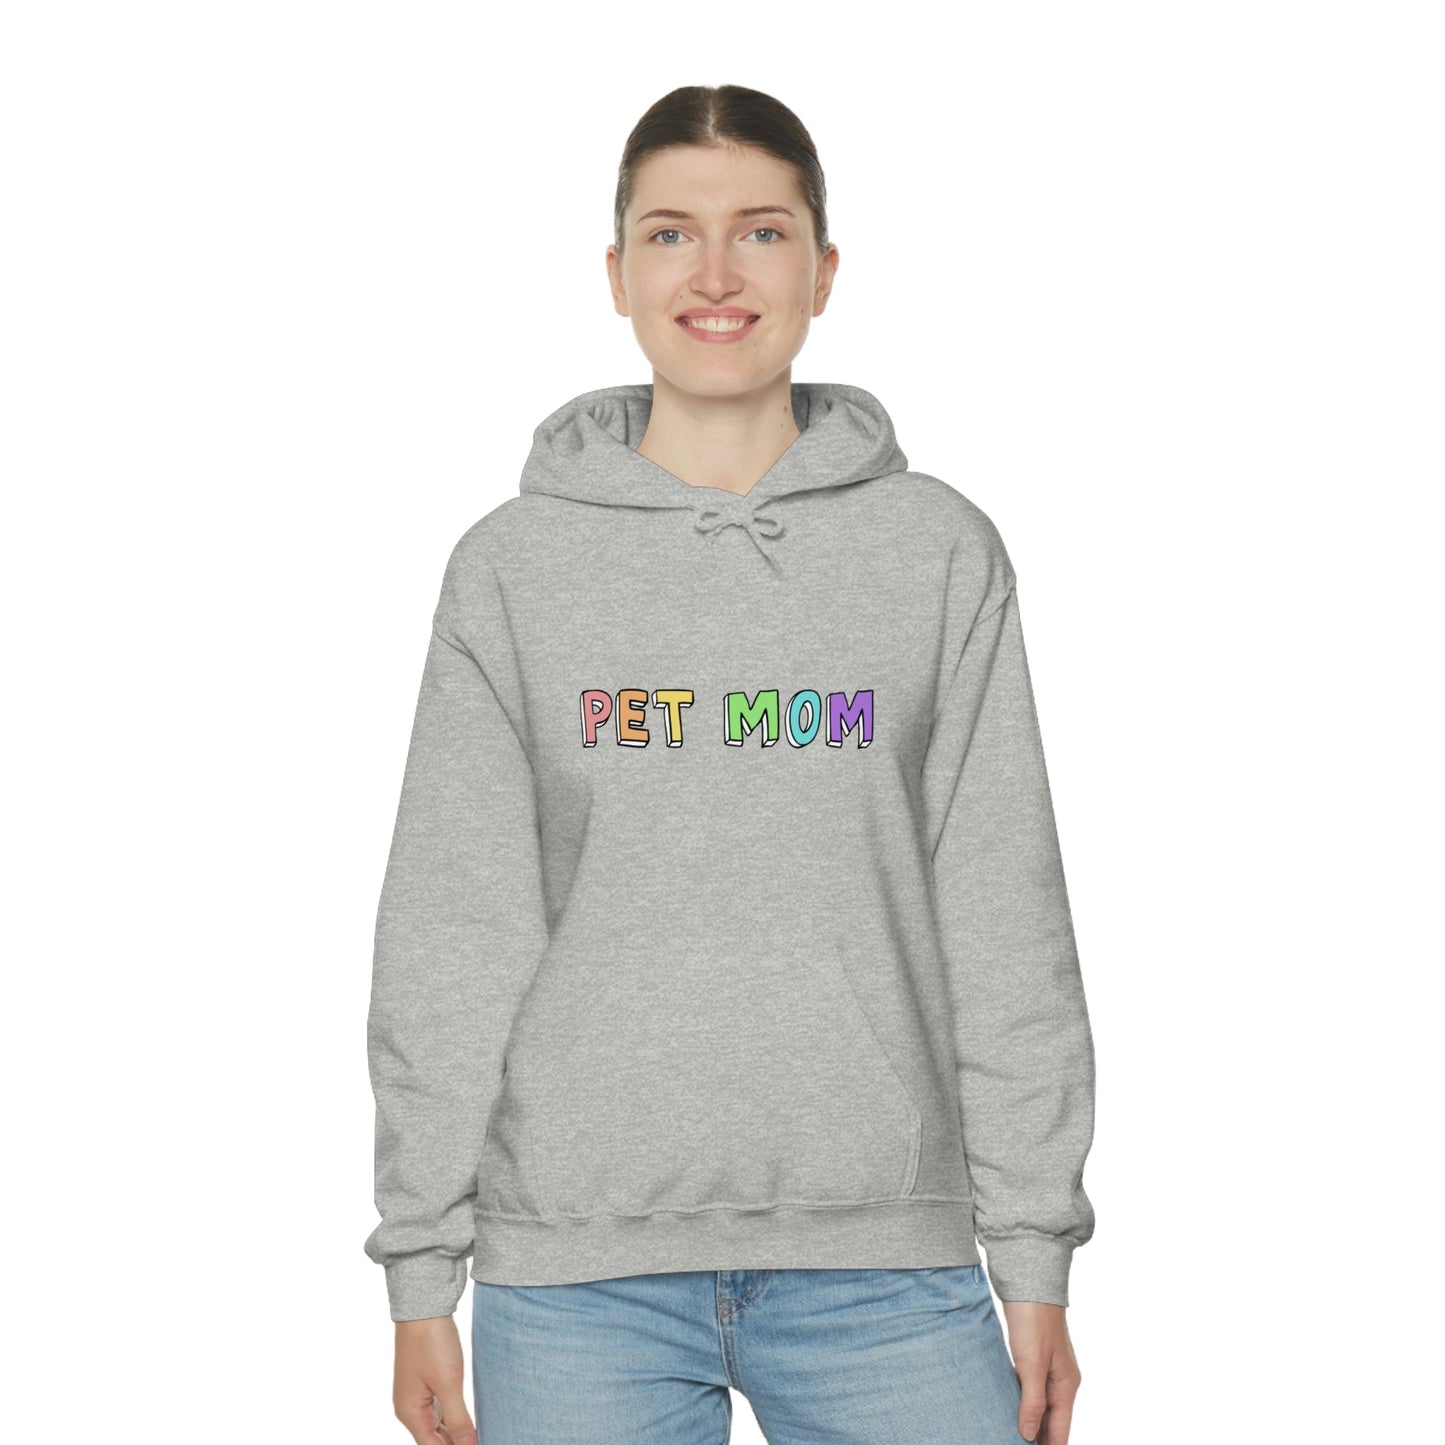 Pet Mom | Hooded Sweatshirt - Detezi Designs-24930703082732504413